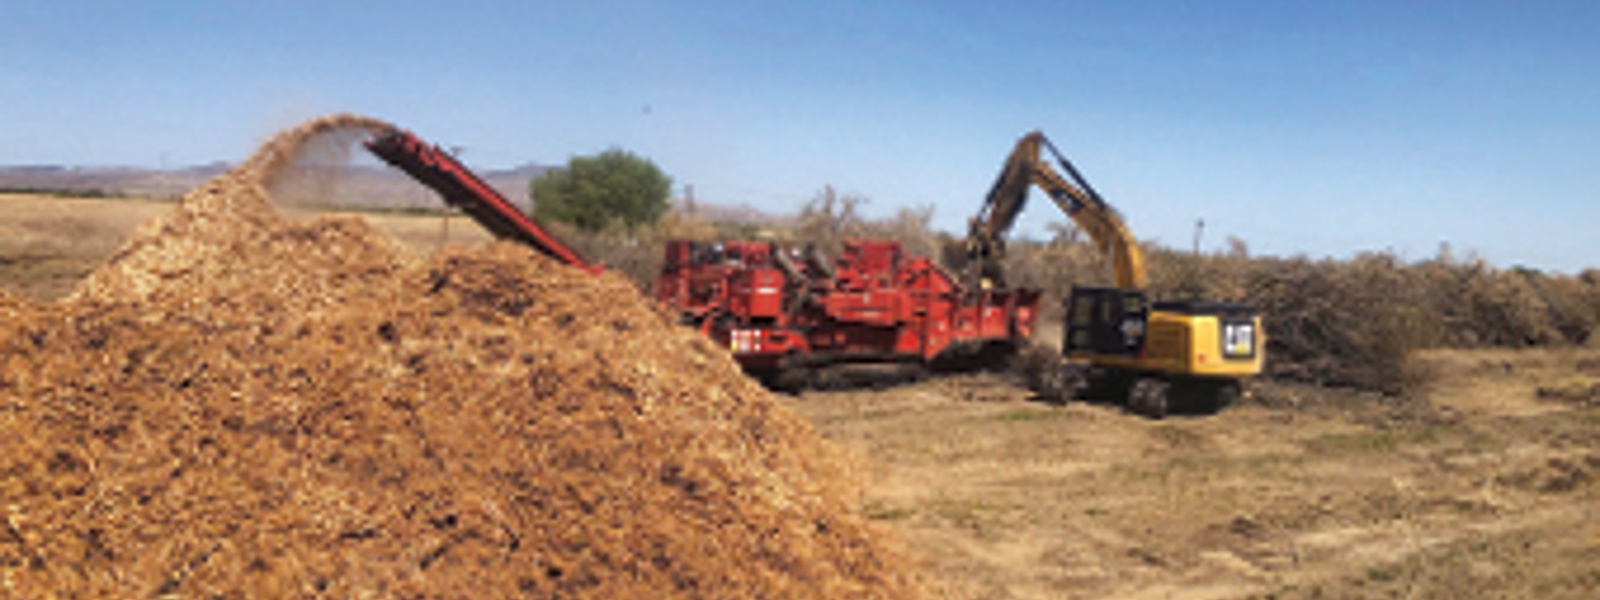 Alternatives sought for farm fallowing amid dust worries